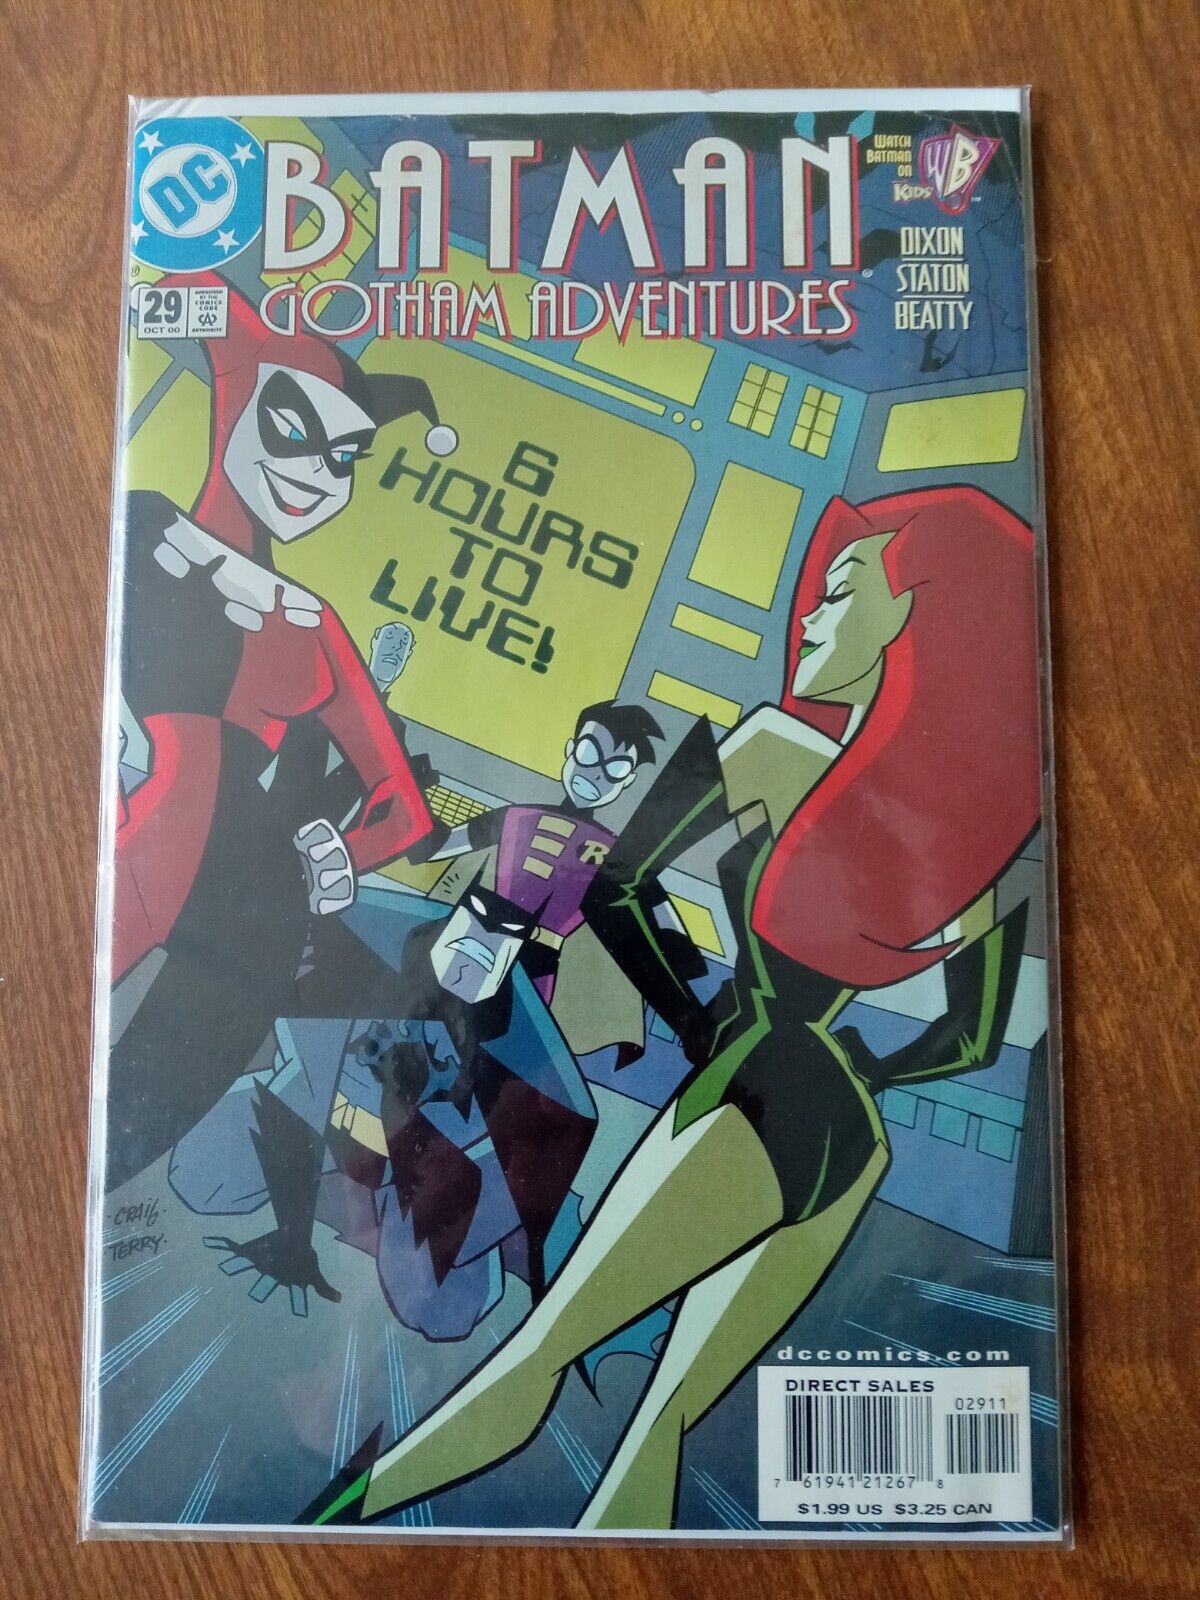 BATMAN GOTHAM ADVENTURES 29 - Iconic Harley Quinn & Ivy Issue